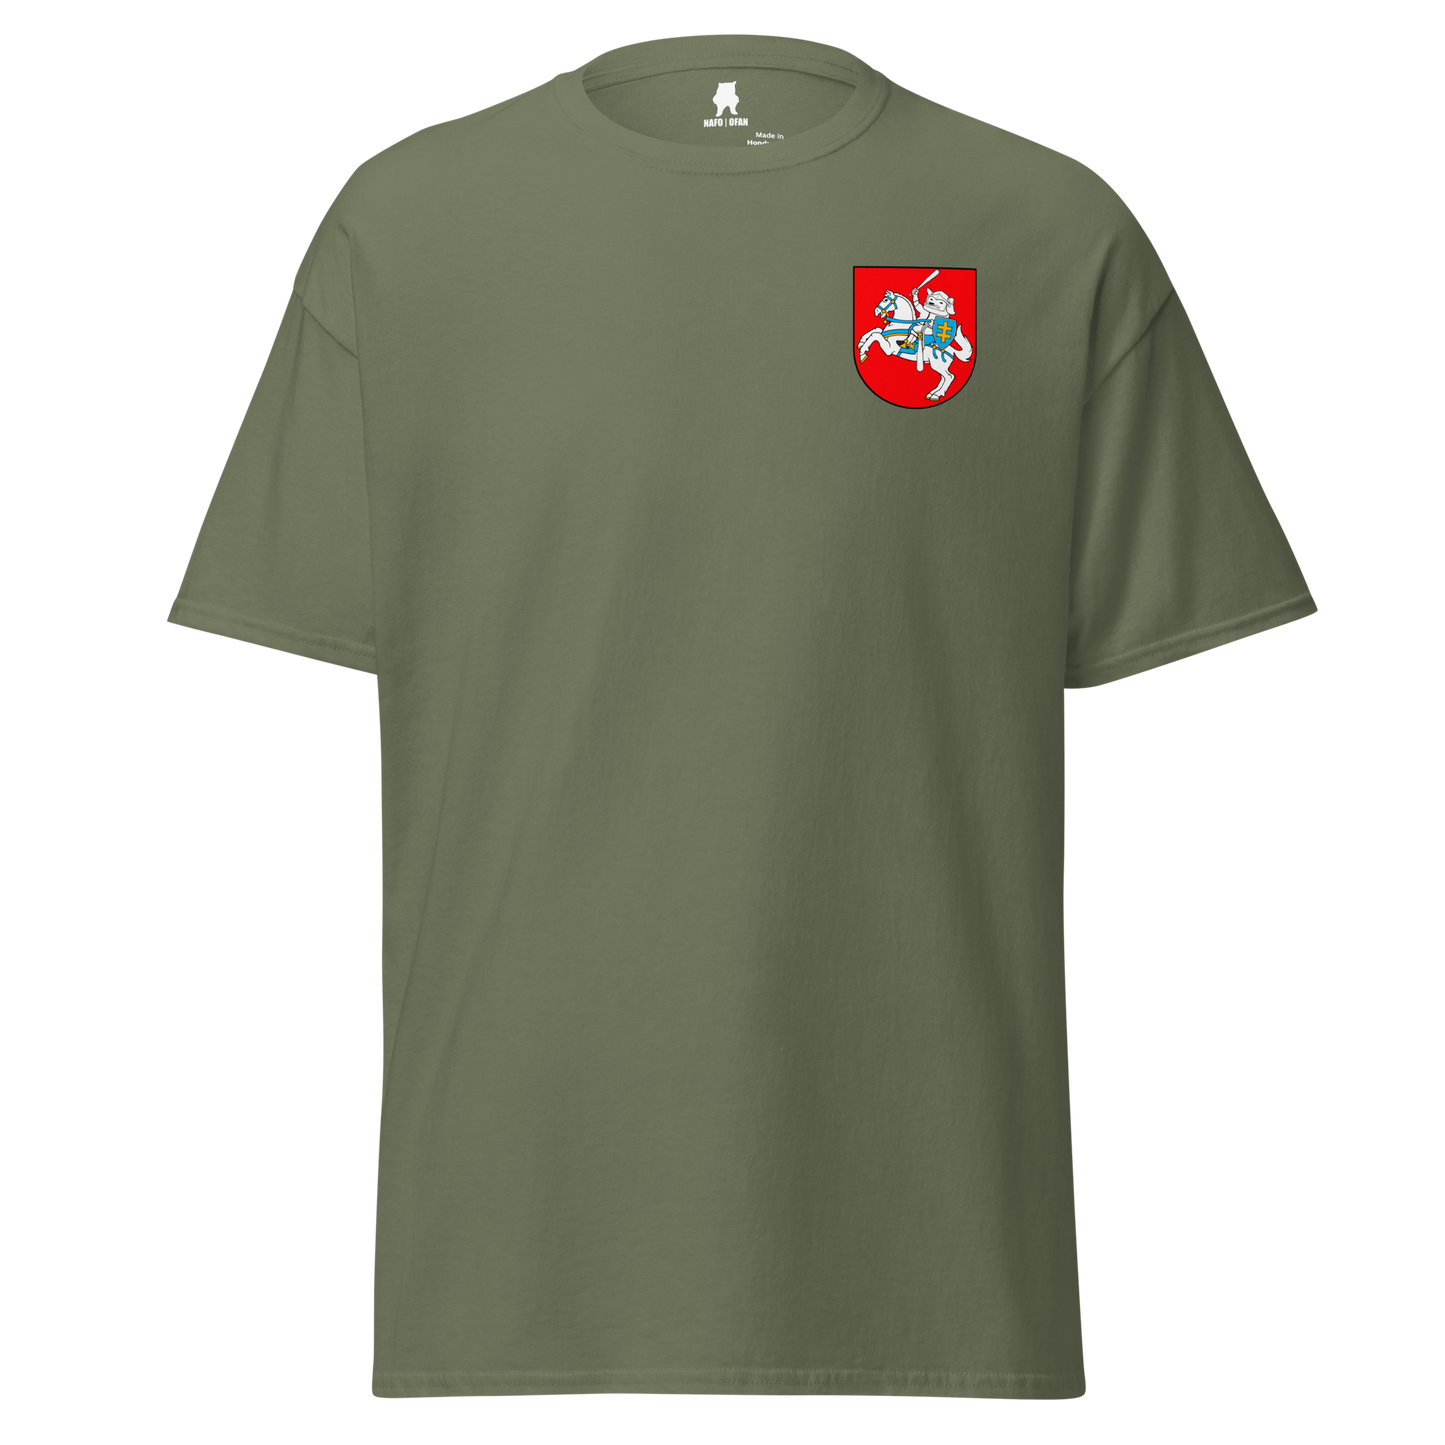 NAFO Coat of Arms T-Shirt